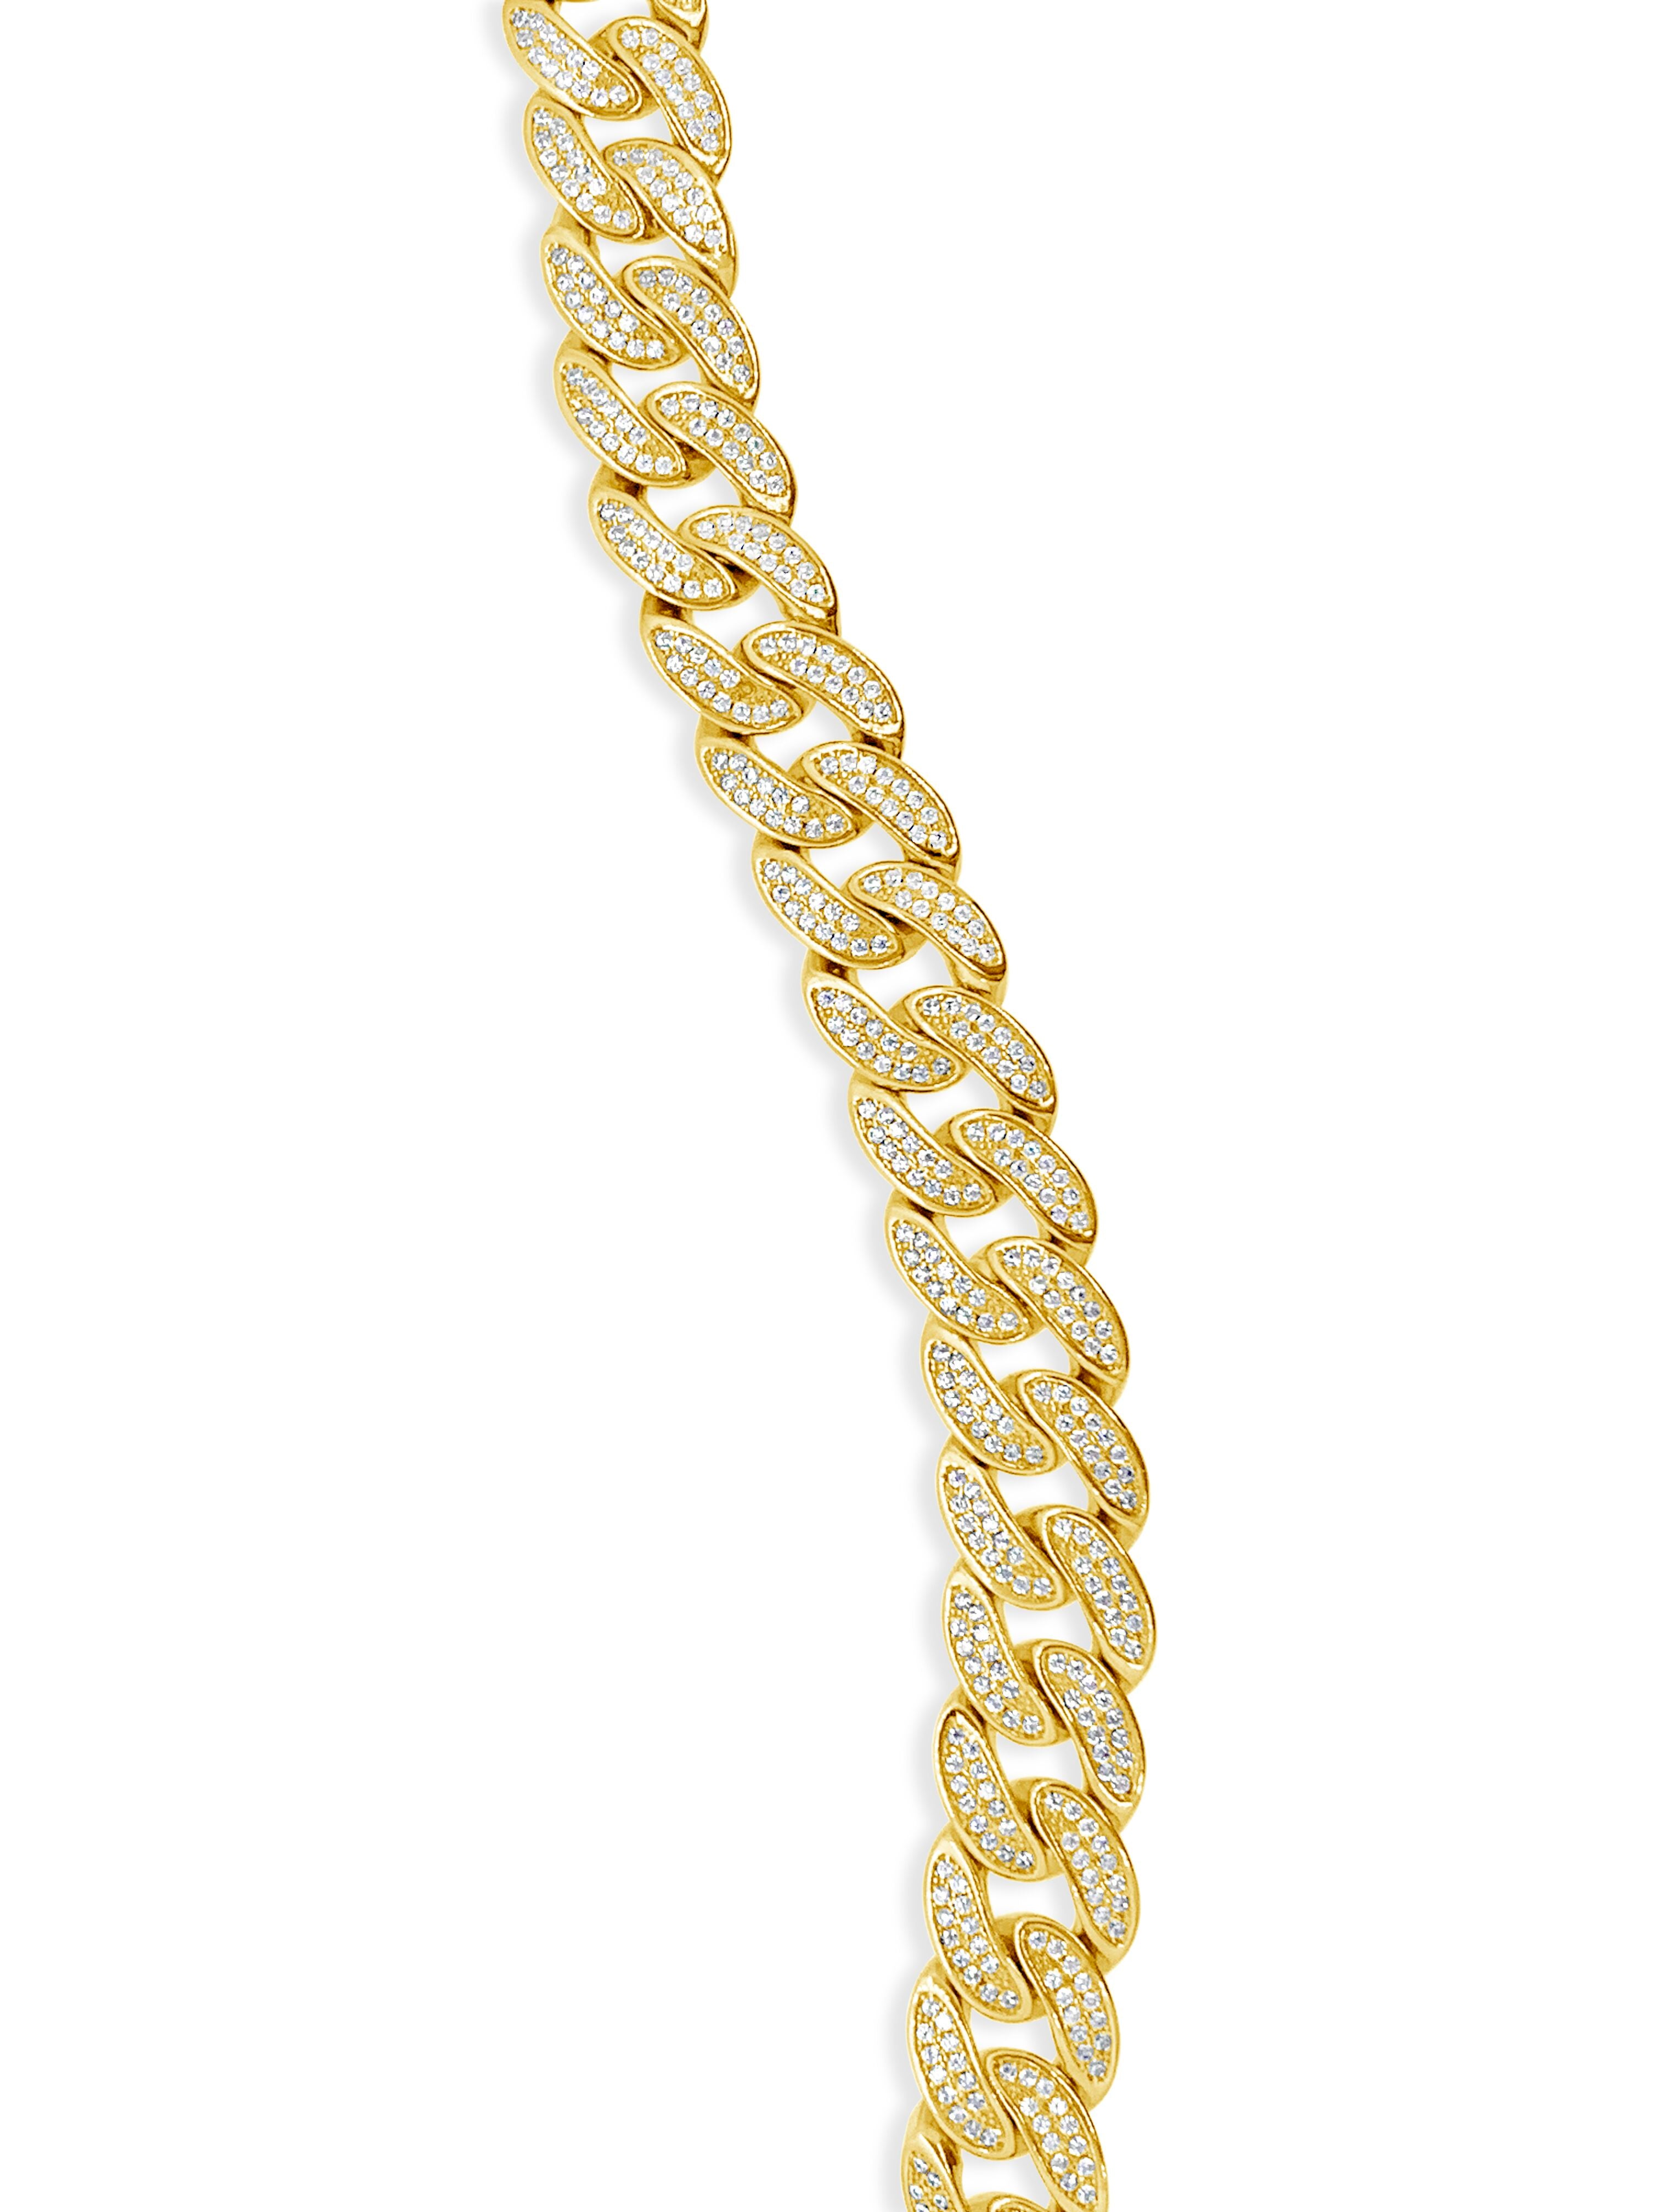 Cuban Link Bracelet in 14k Yellow Gold With Cubic Zirconia Stones